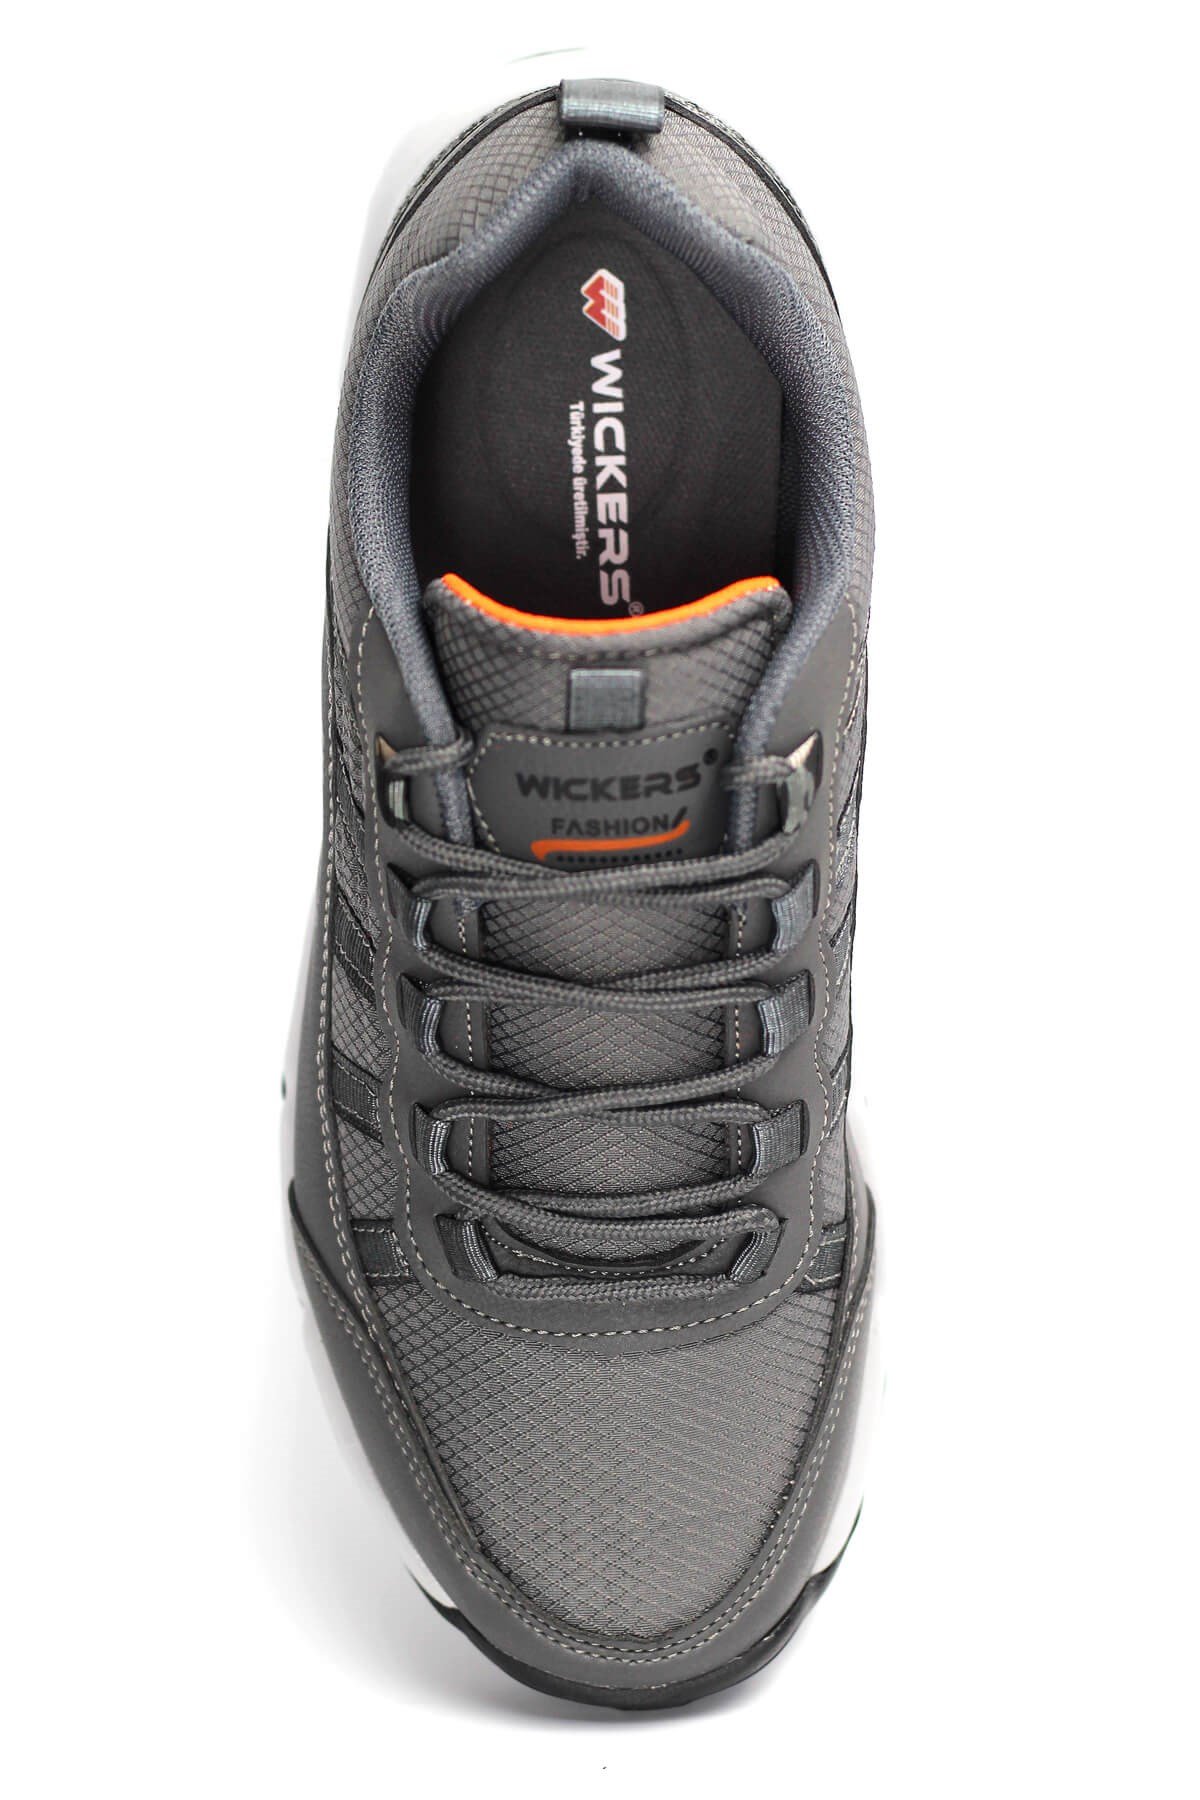 Wickers Outdoor Spor Sneakers Ayakkabı Erkek G42M0642398-Füme  G42M0642398-Füme 8682023305526